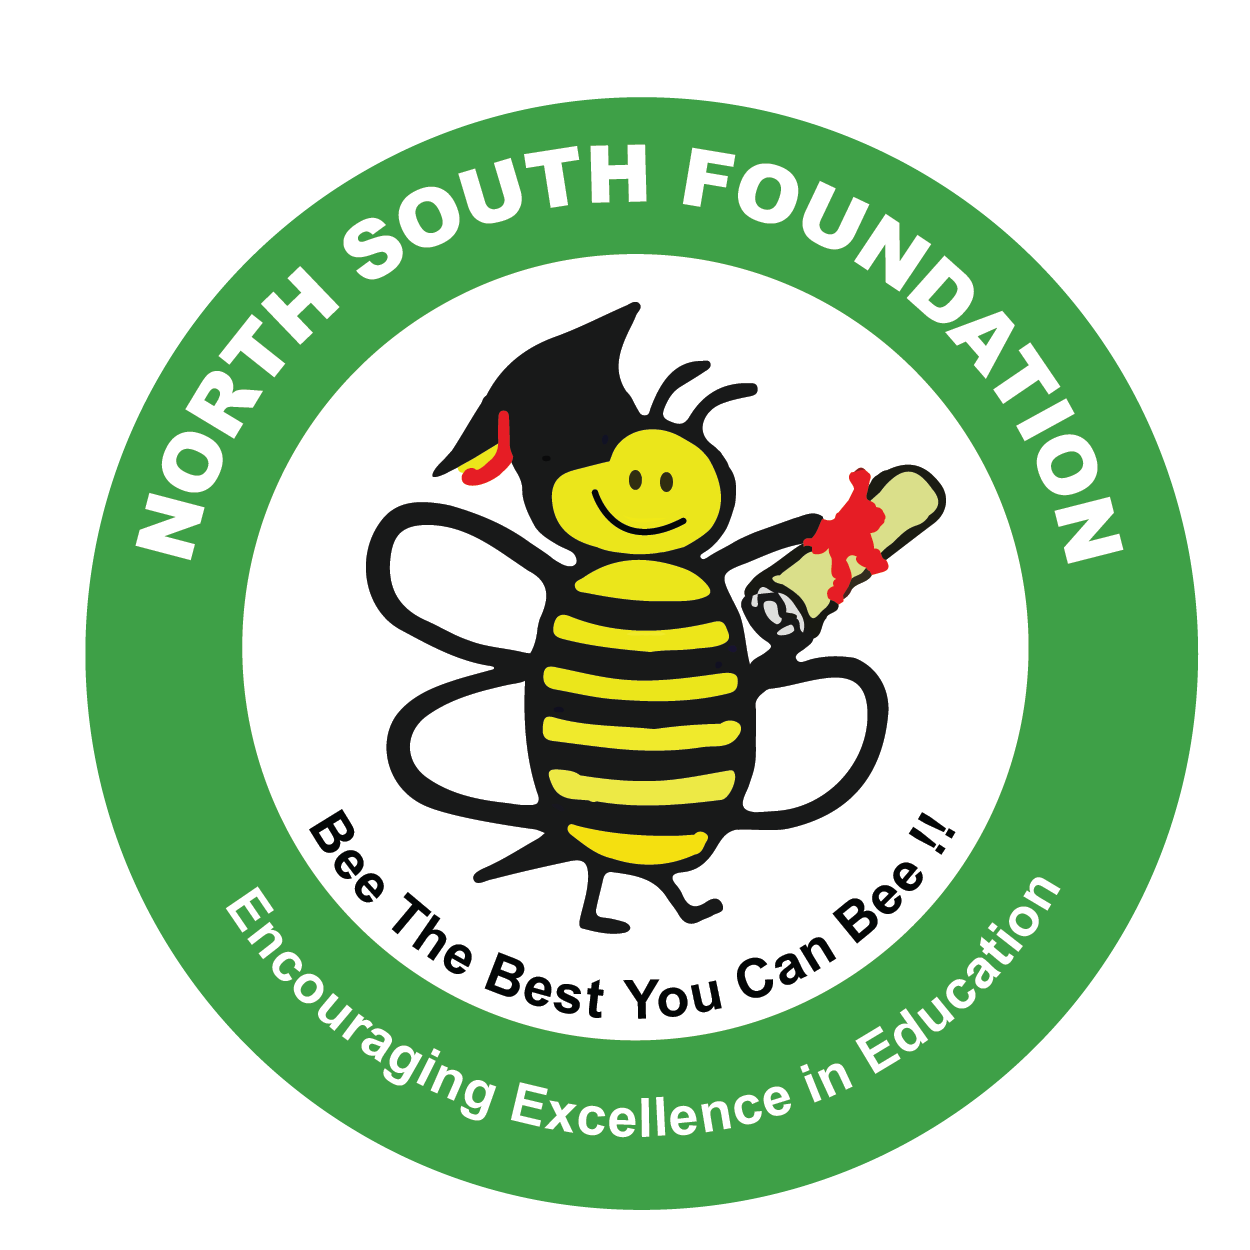 North South Foundation (NSF) Scholarship